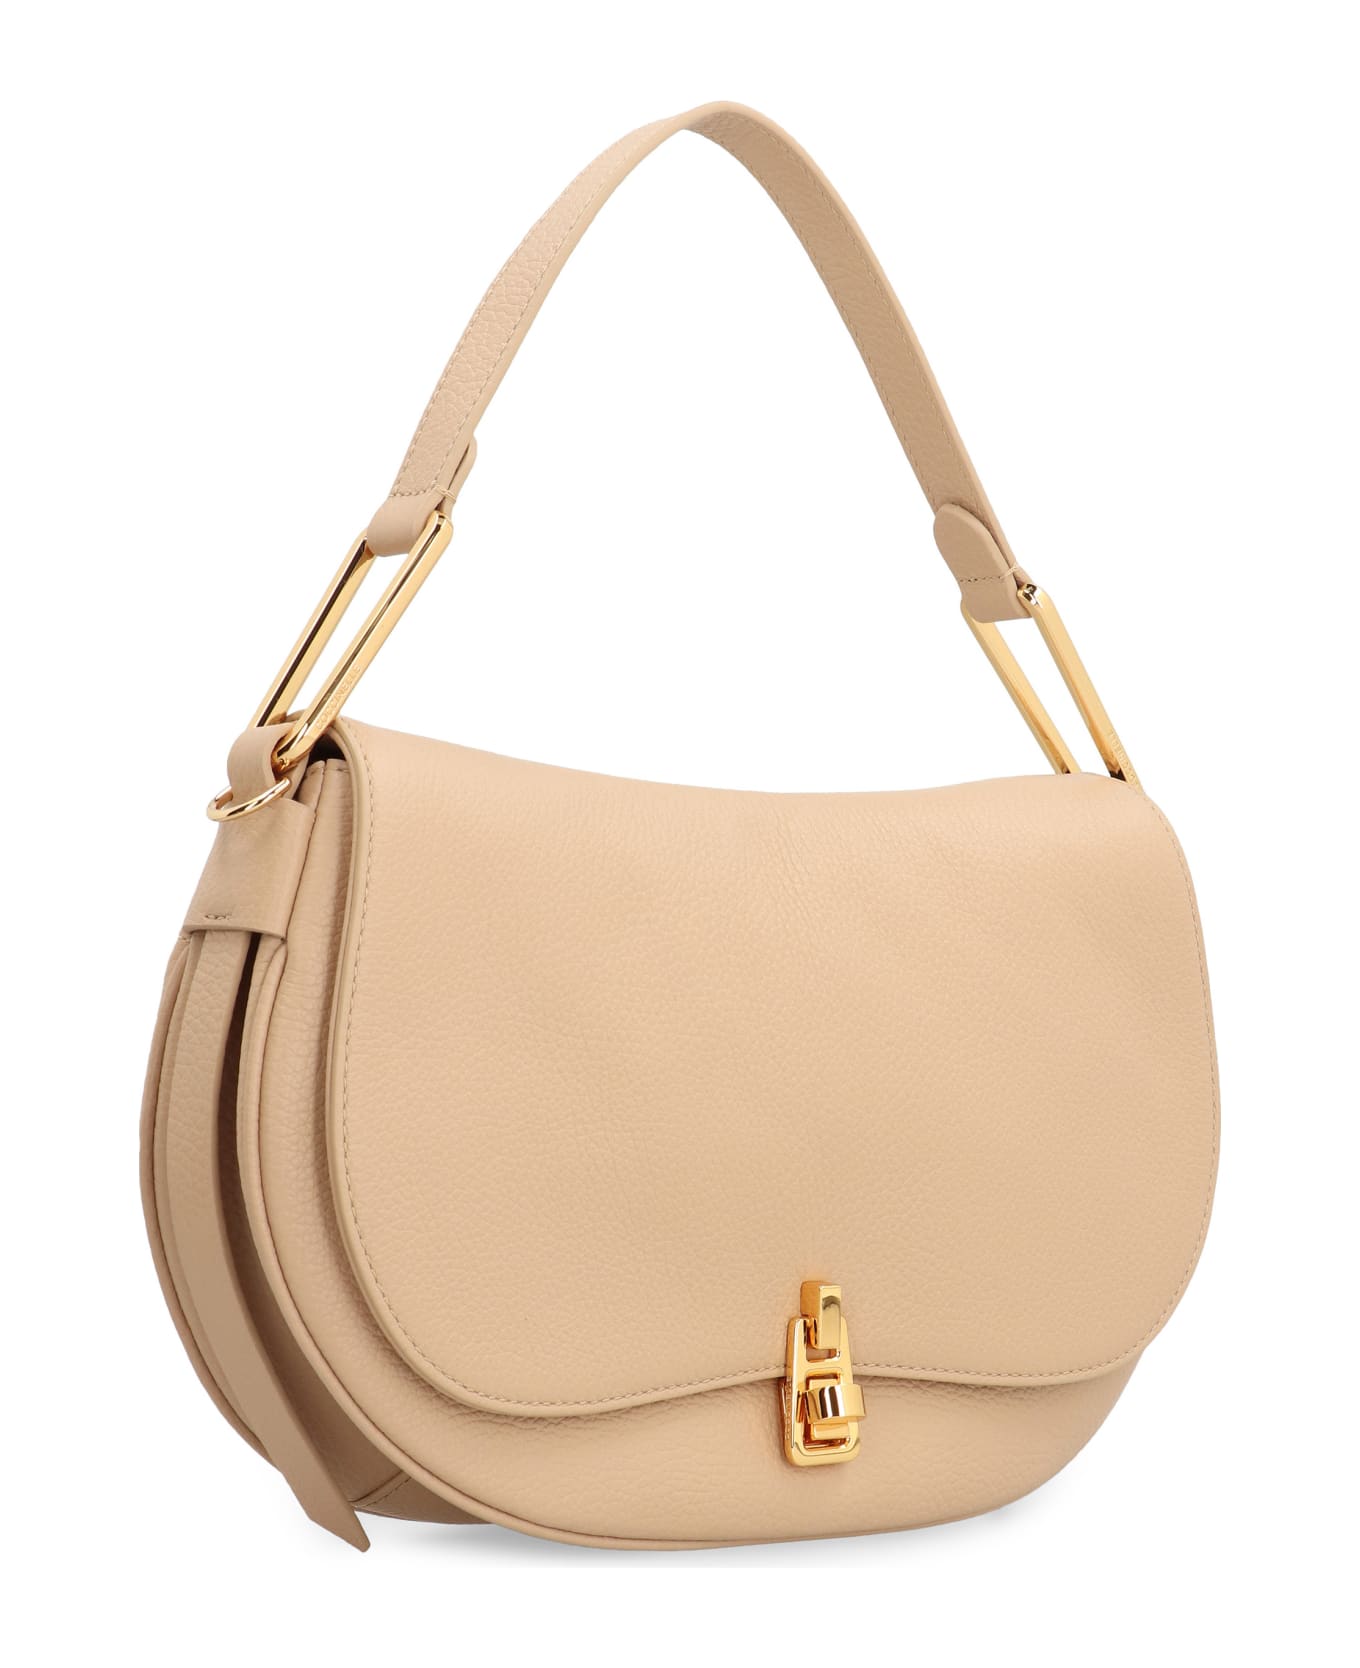 Coccinelle Magie Soft Leather Handbag - Beige